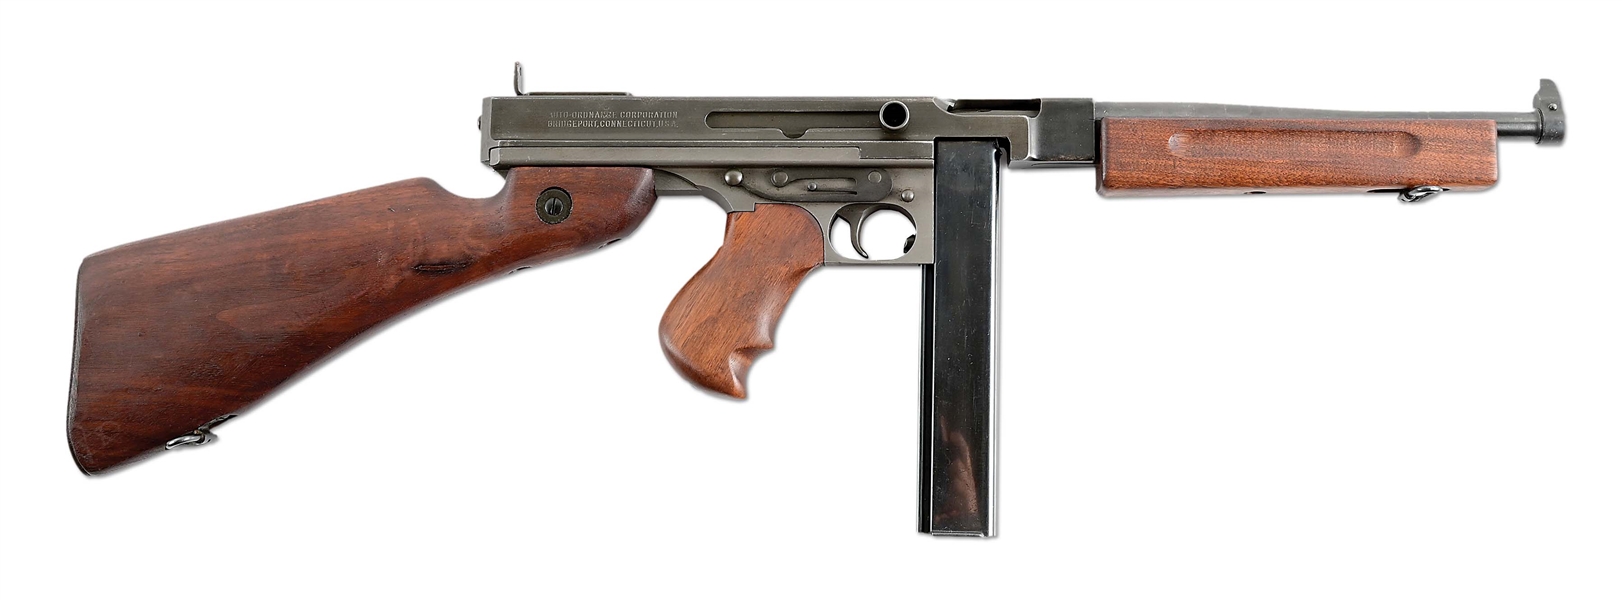 (N) SAVAGE MANUFACTURED M1 THOMPSON MACHINE GUN WITH ORIGINAL HAMMER-FIRED FIRING PIN (CURIO AND RELIC).